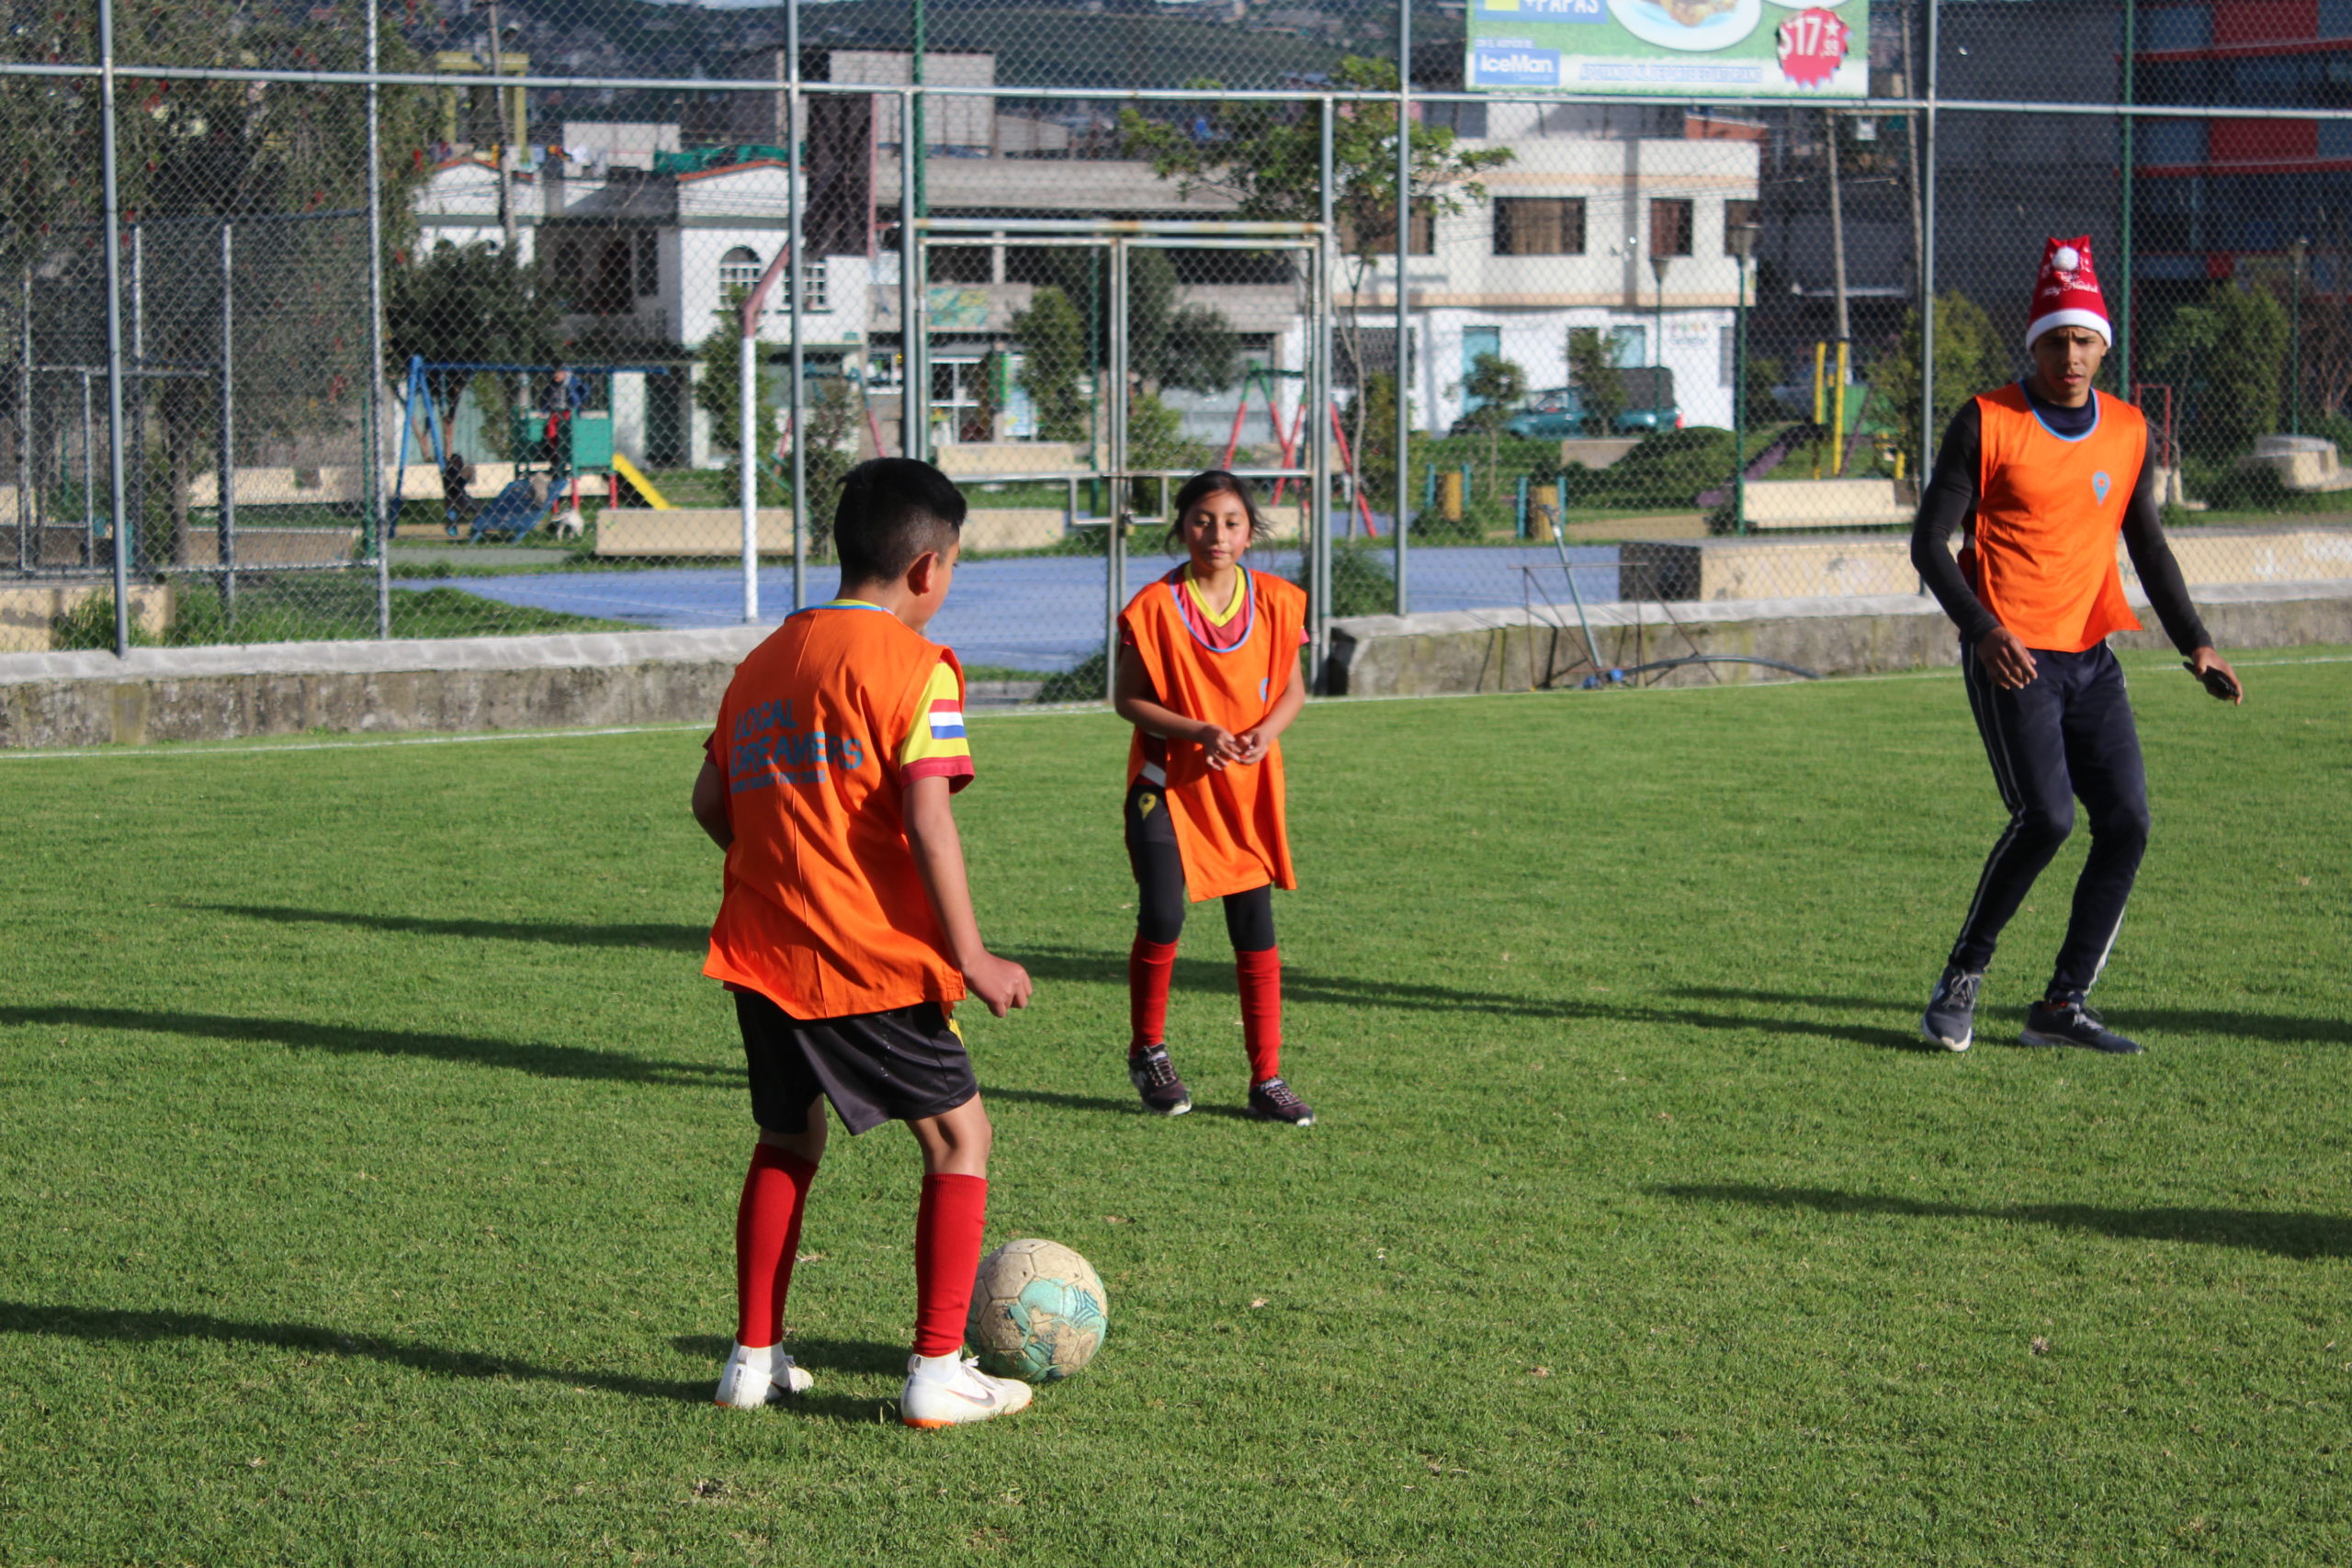 Local Dreamers soccer school Saylon